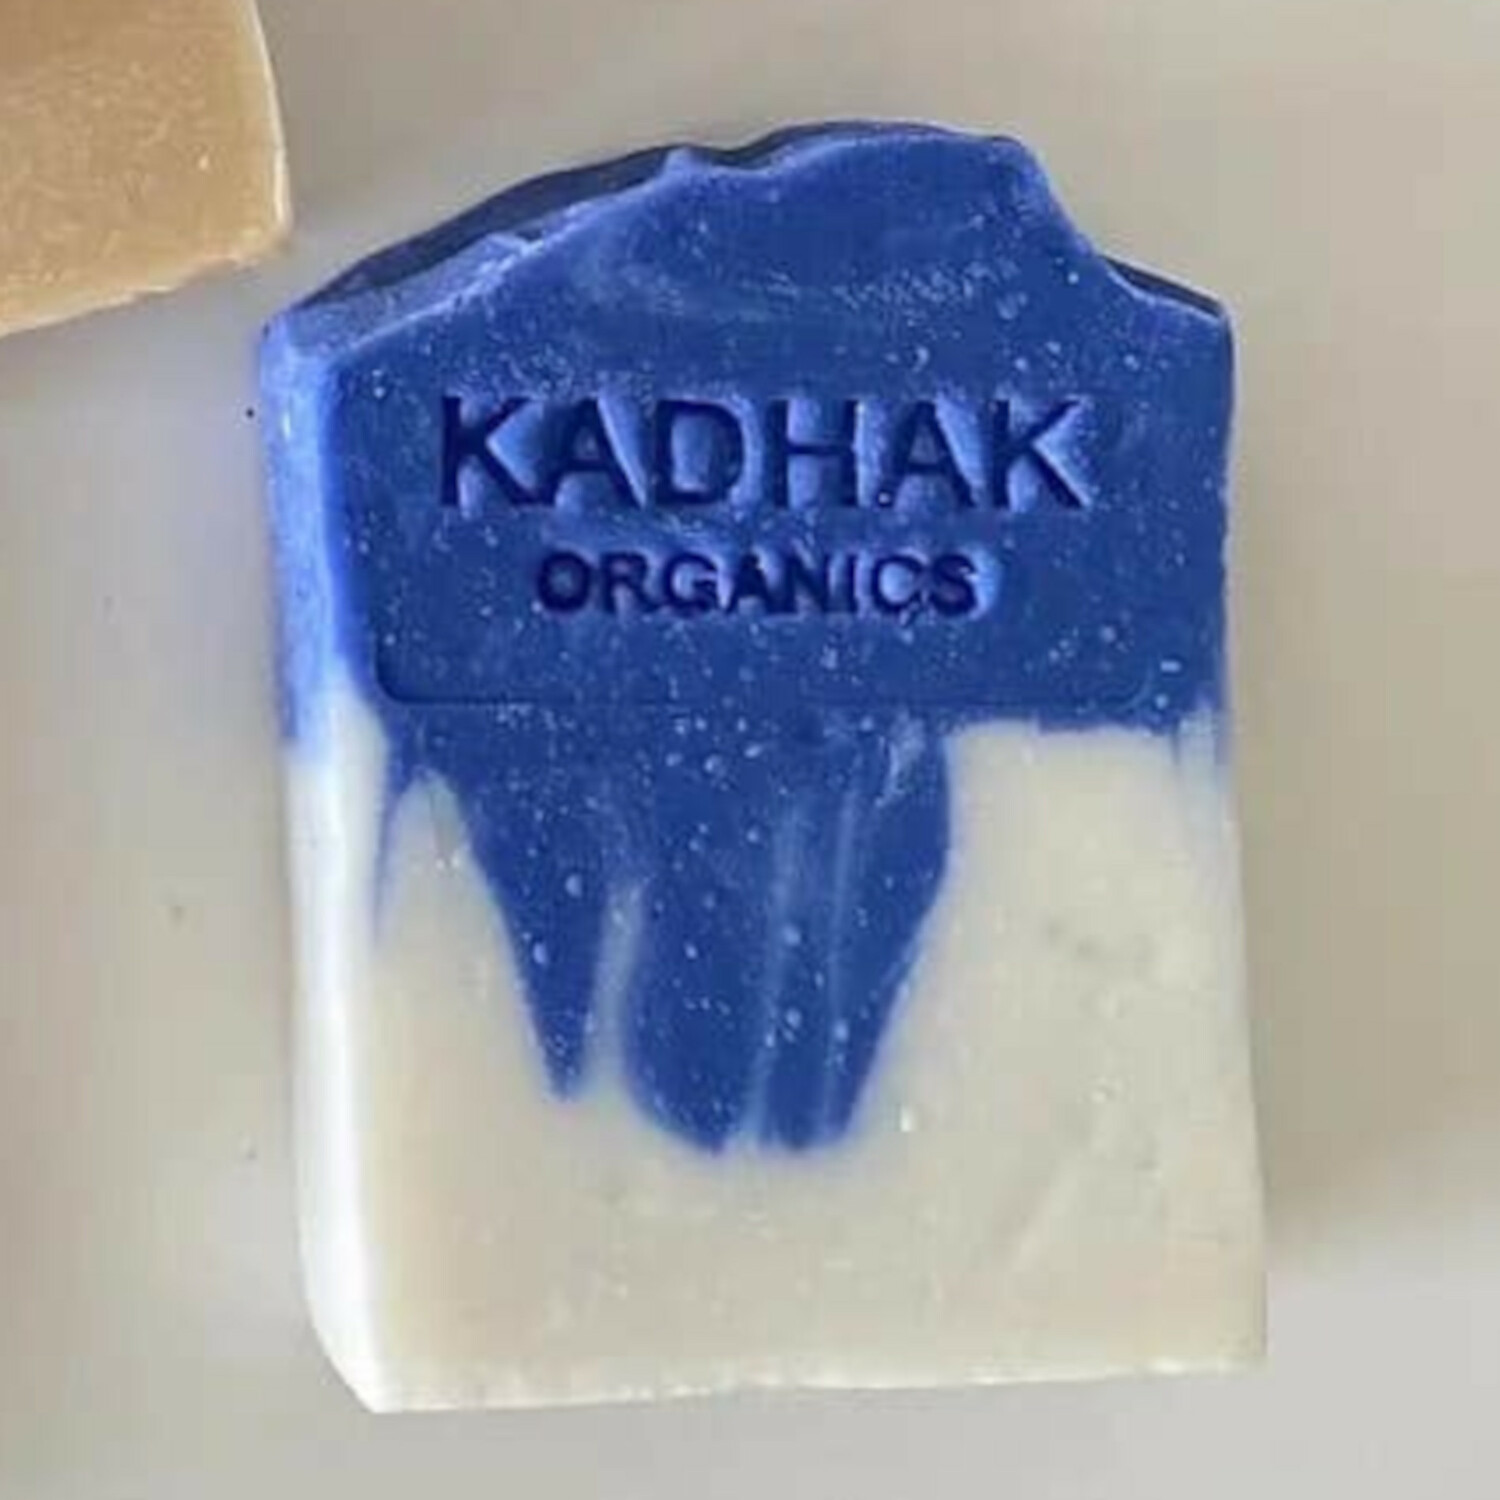 <p>Kadhak Sky Blue Yak Butter Soap</p>